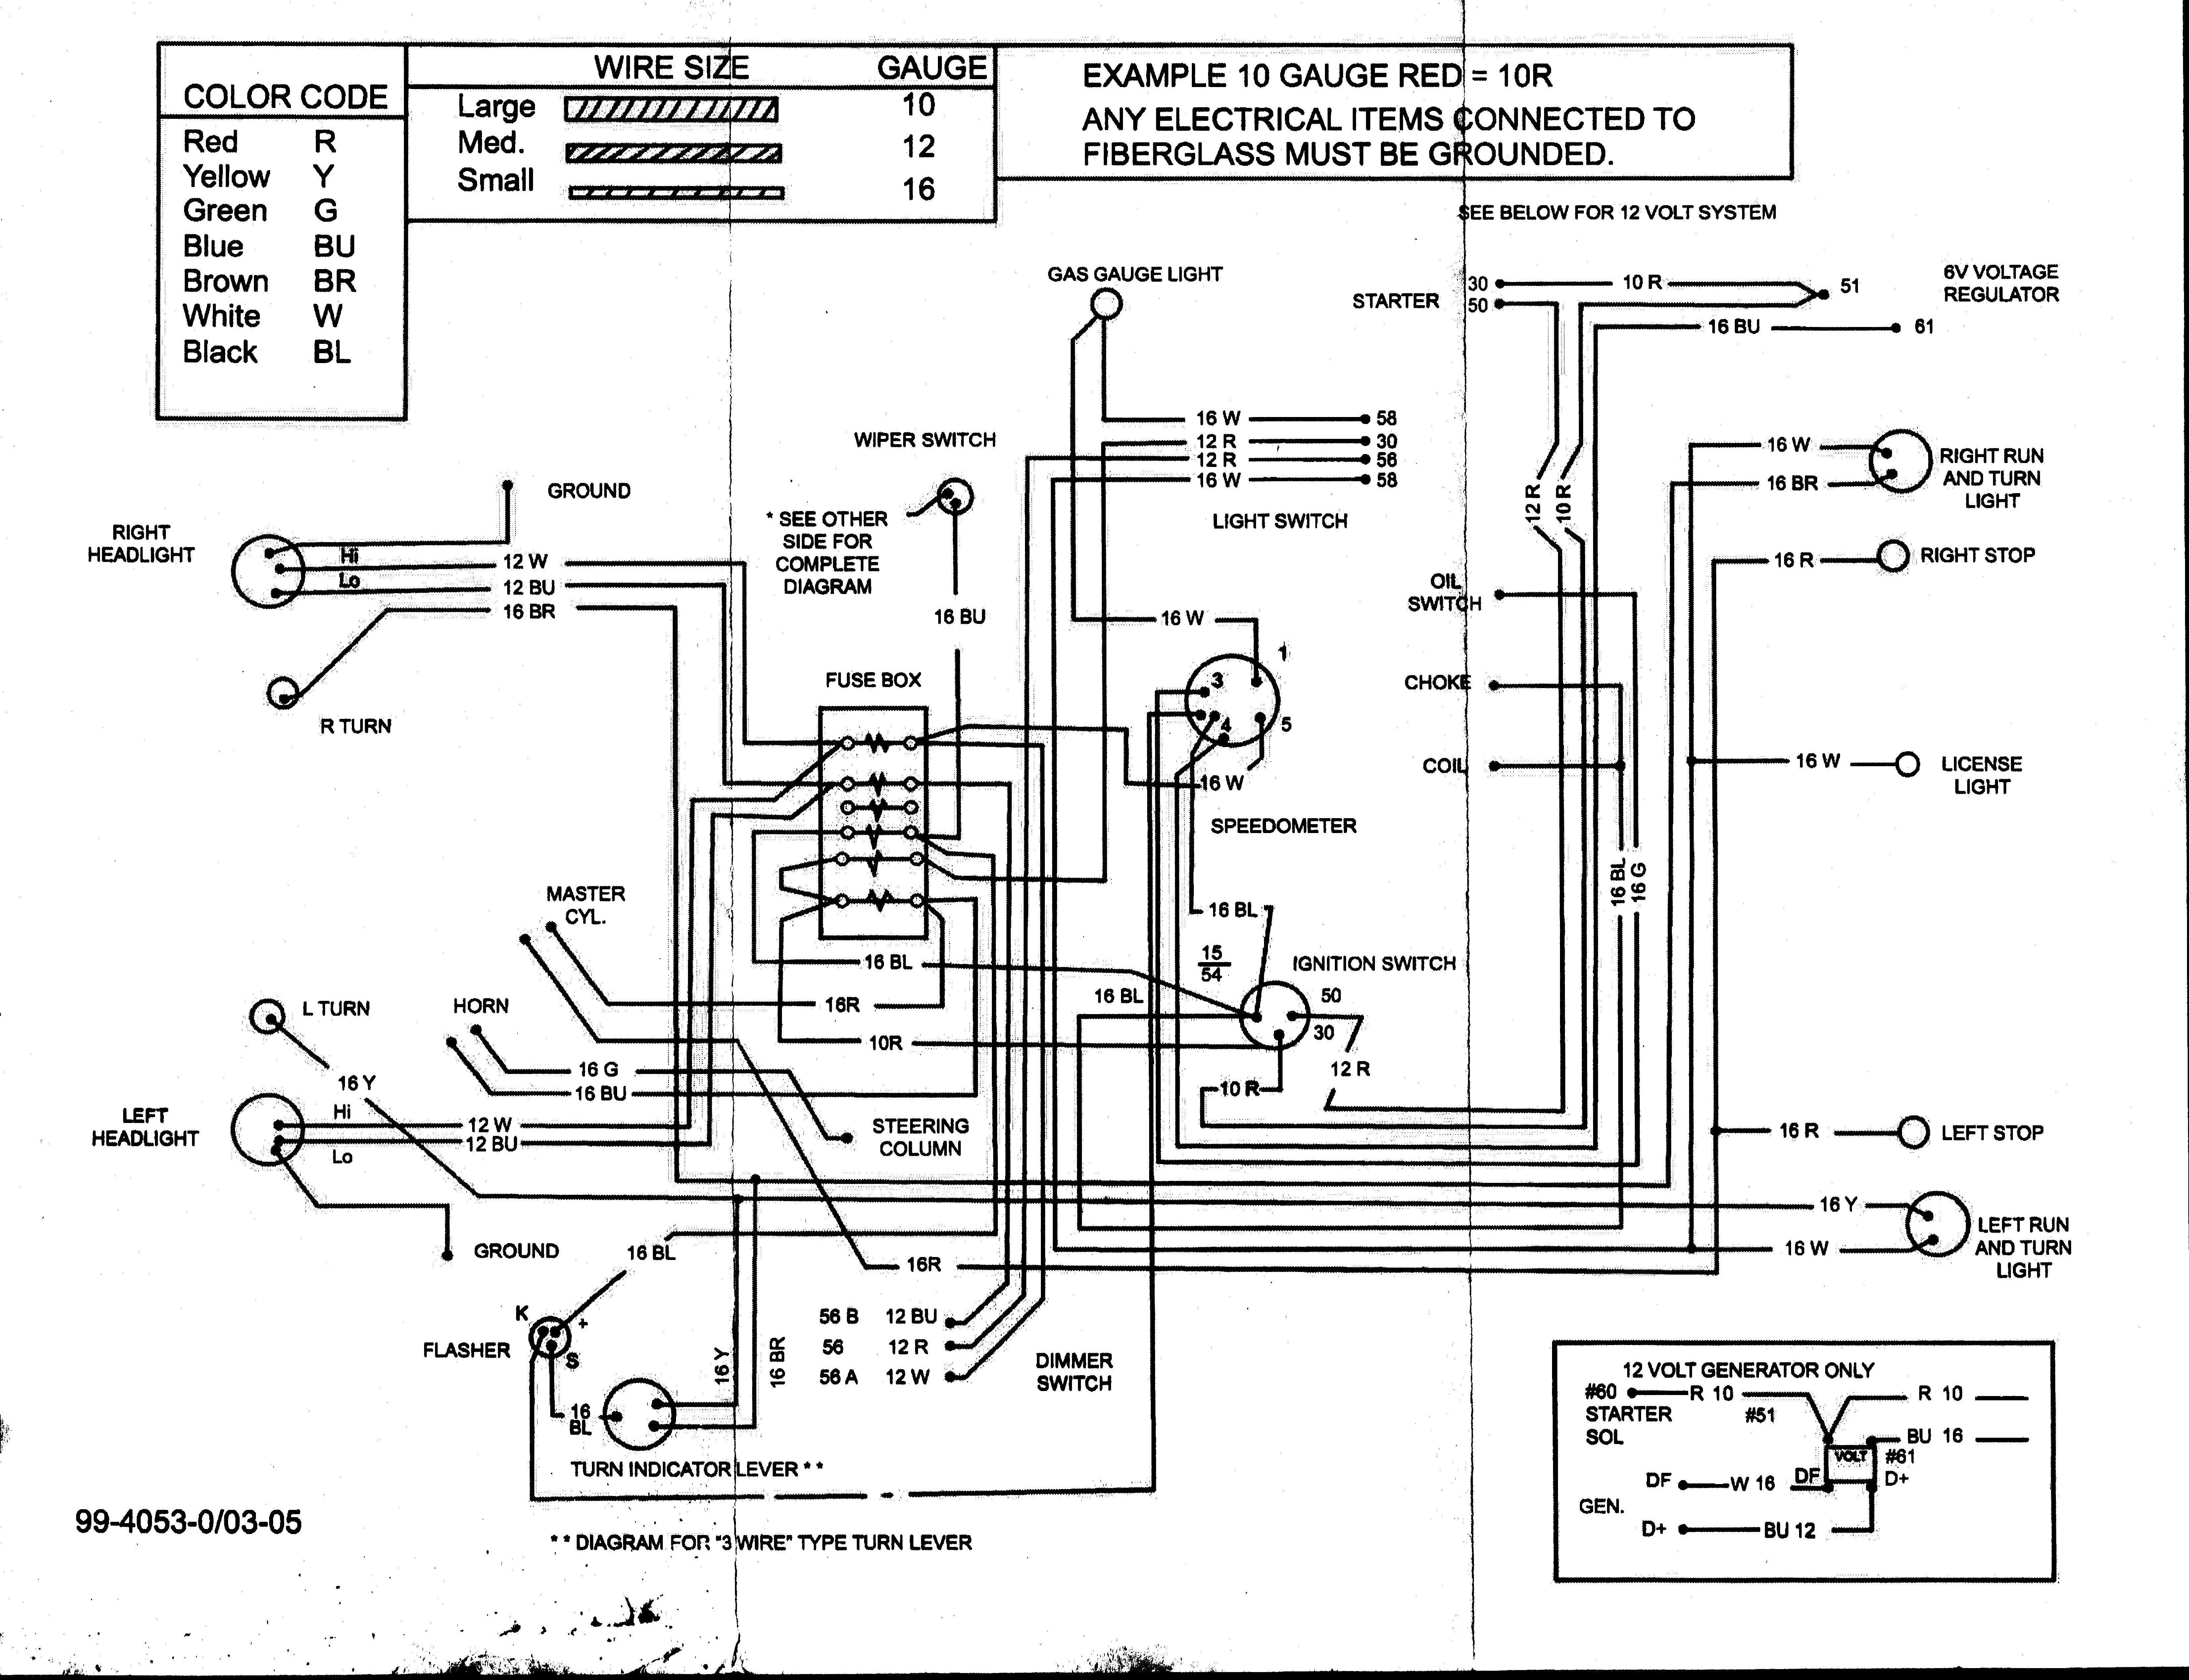 Motorguide Trolling Motor Wiring Diagram Electrical Circuit Fresh Watt Stopper Power Pack Wiring Diagram Uptuto